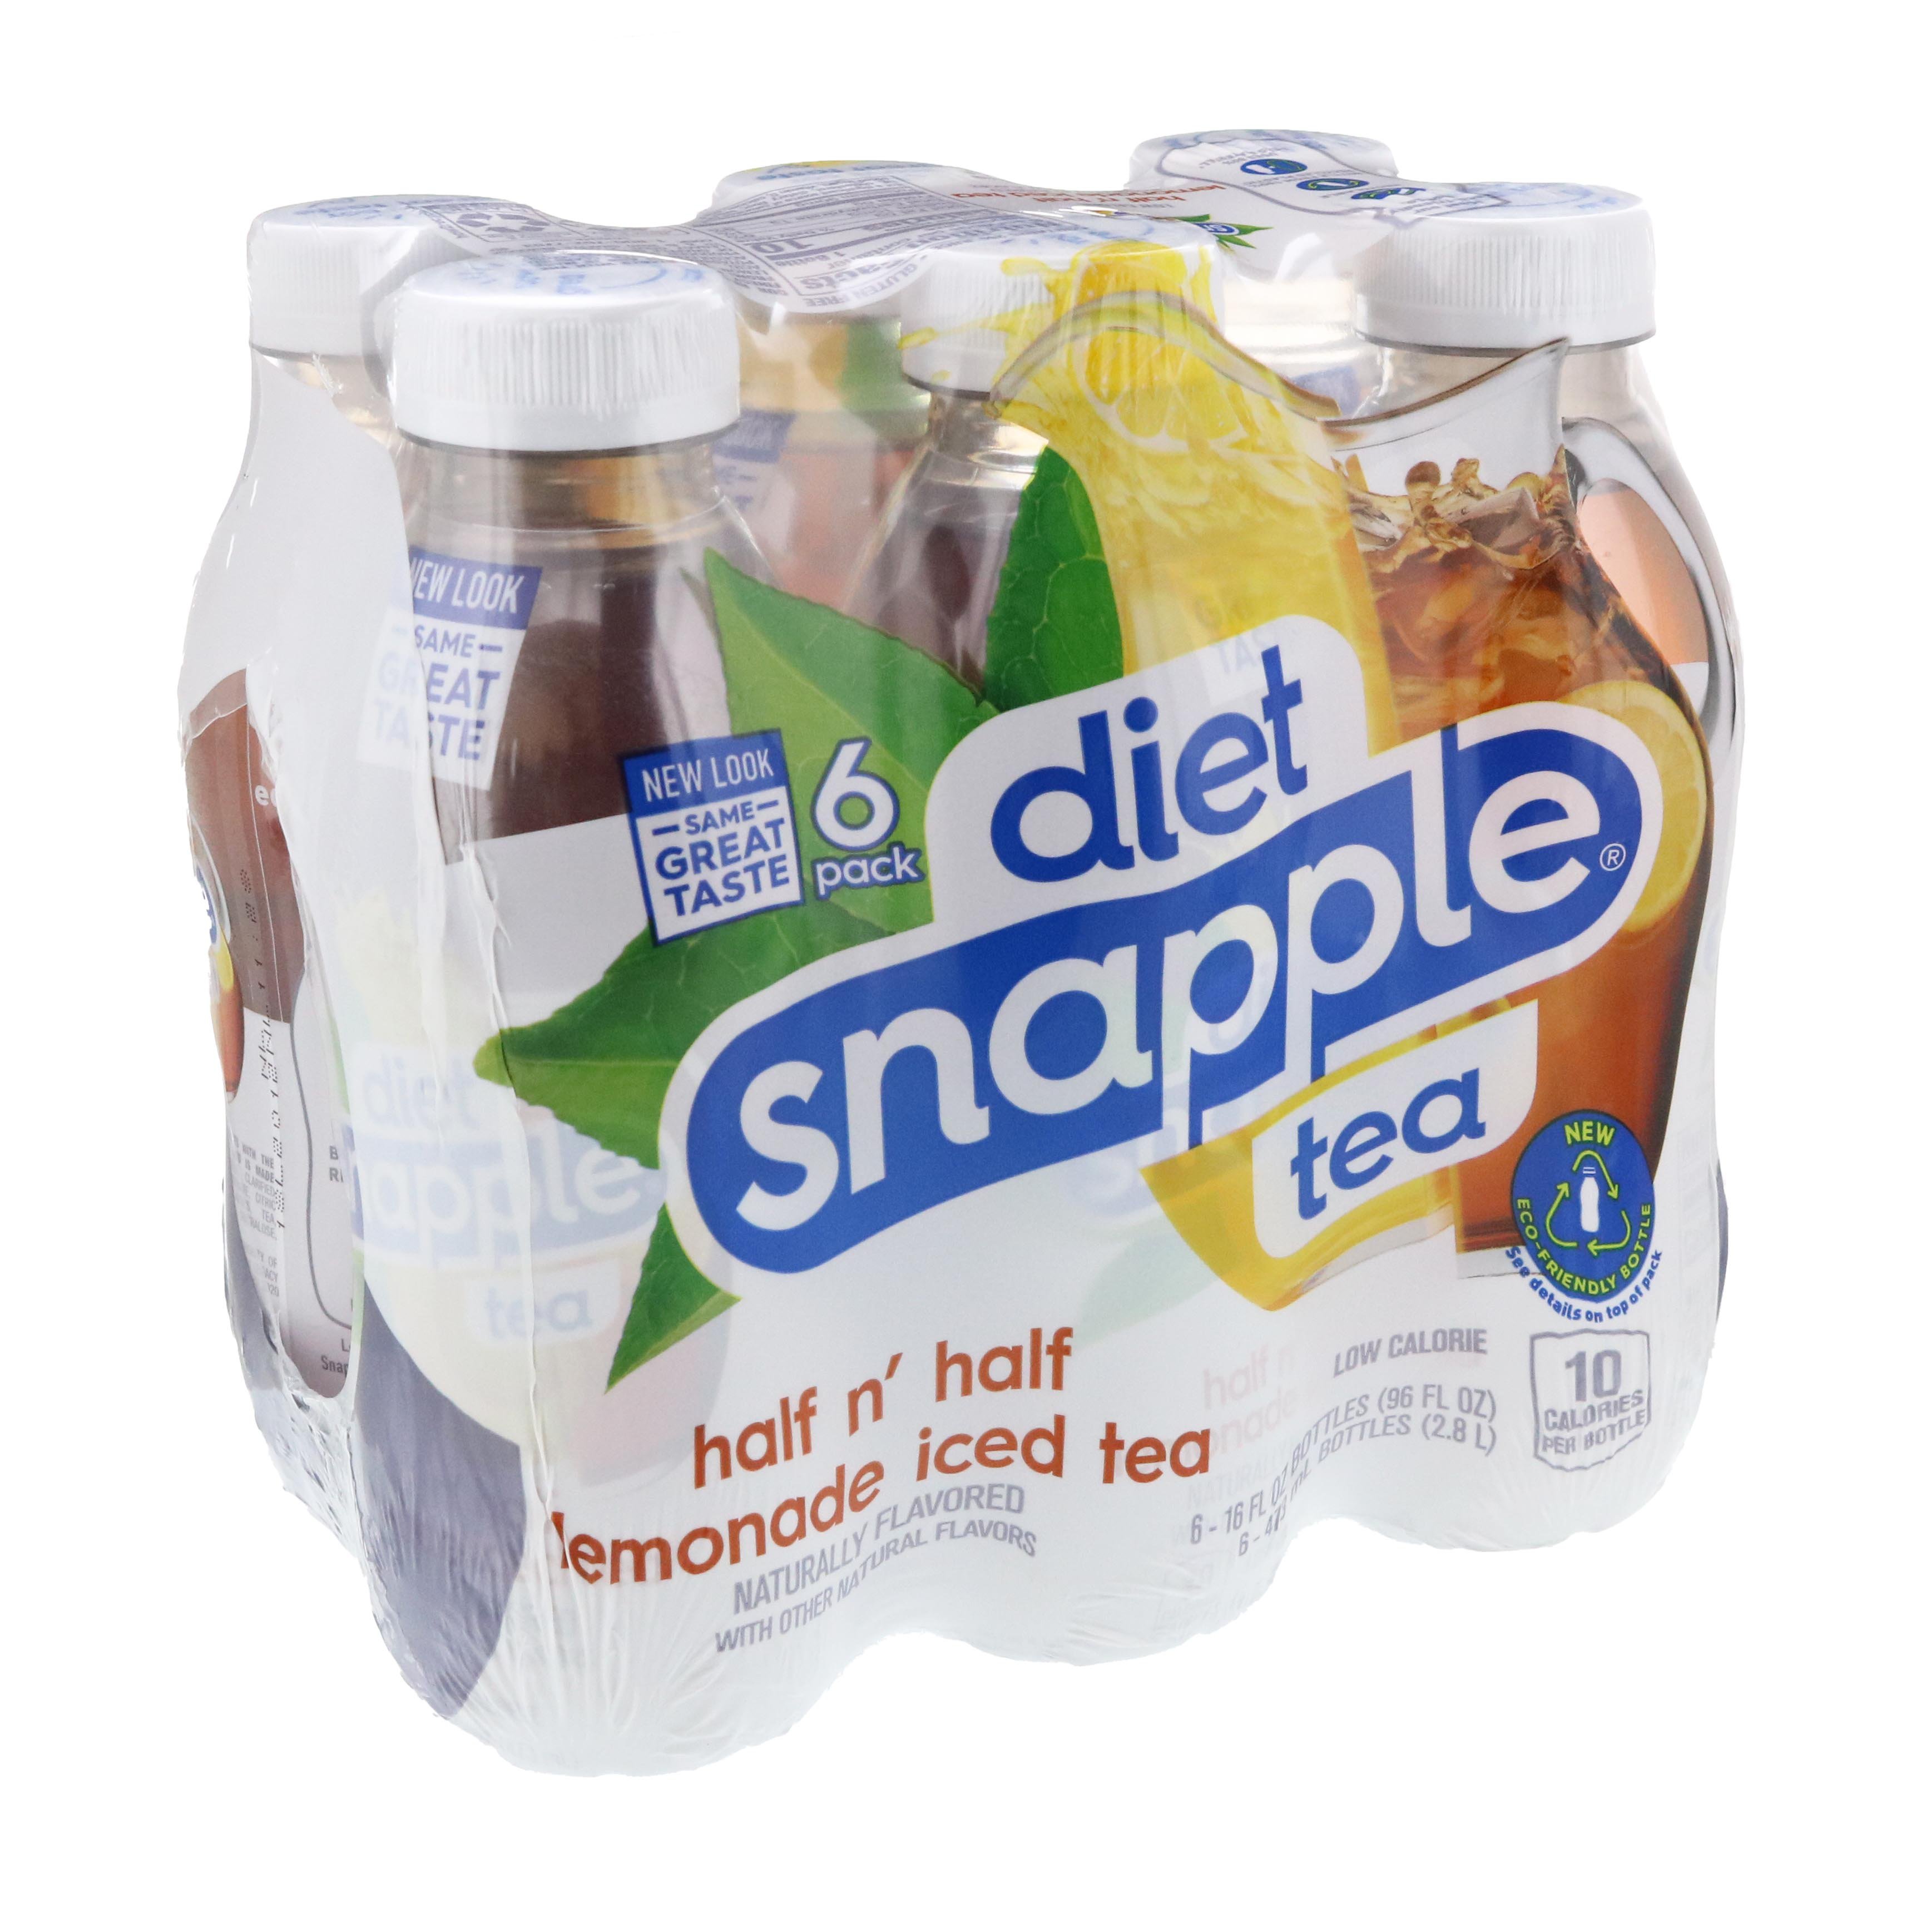 Snapple Diet Snapple Half N Half Lemonade Iced Tea 16 Oz Bottles Shop Tea At H E B